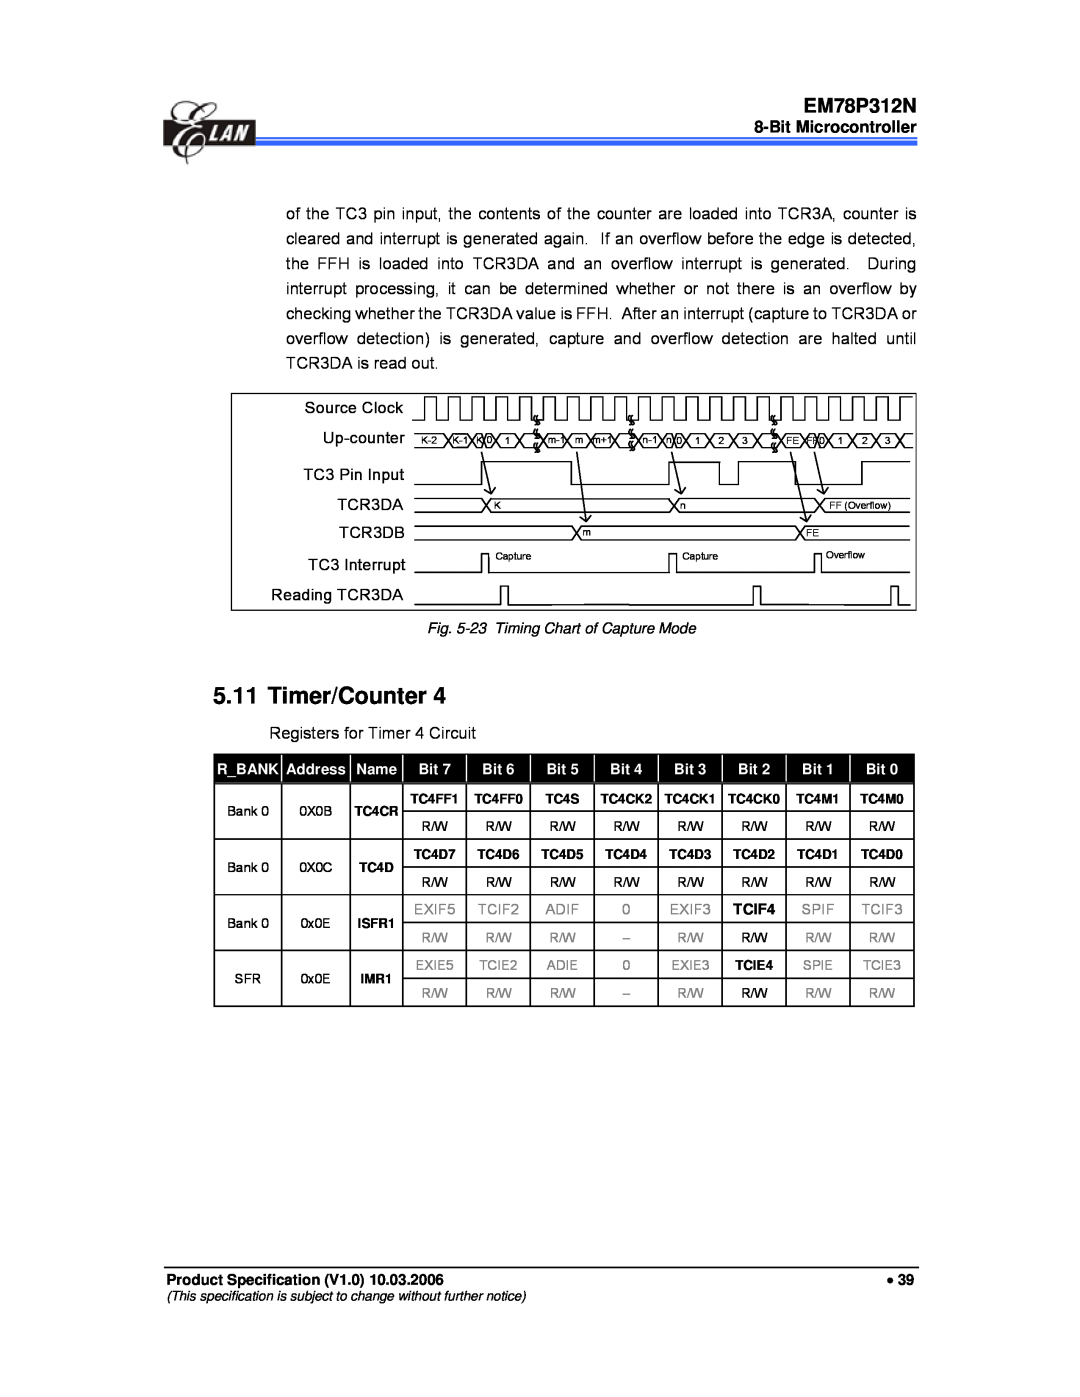 IBM EM78P312N manual Timer/Counter, Bit Microcontroller 